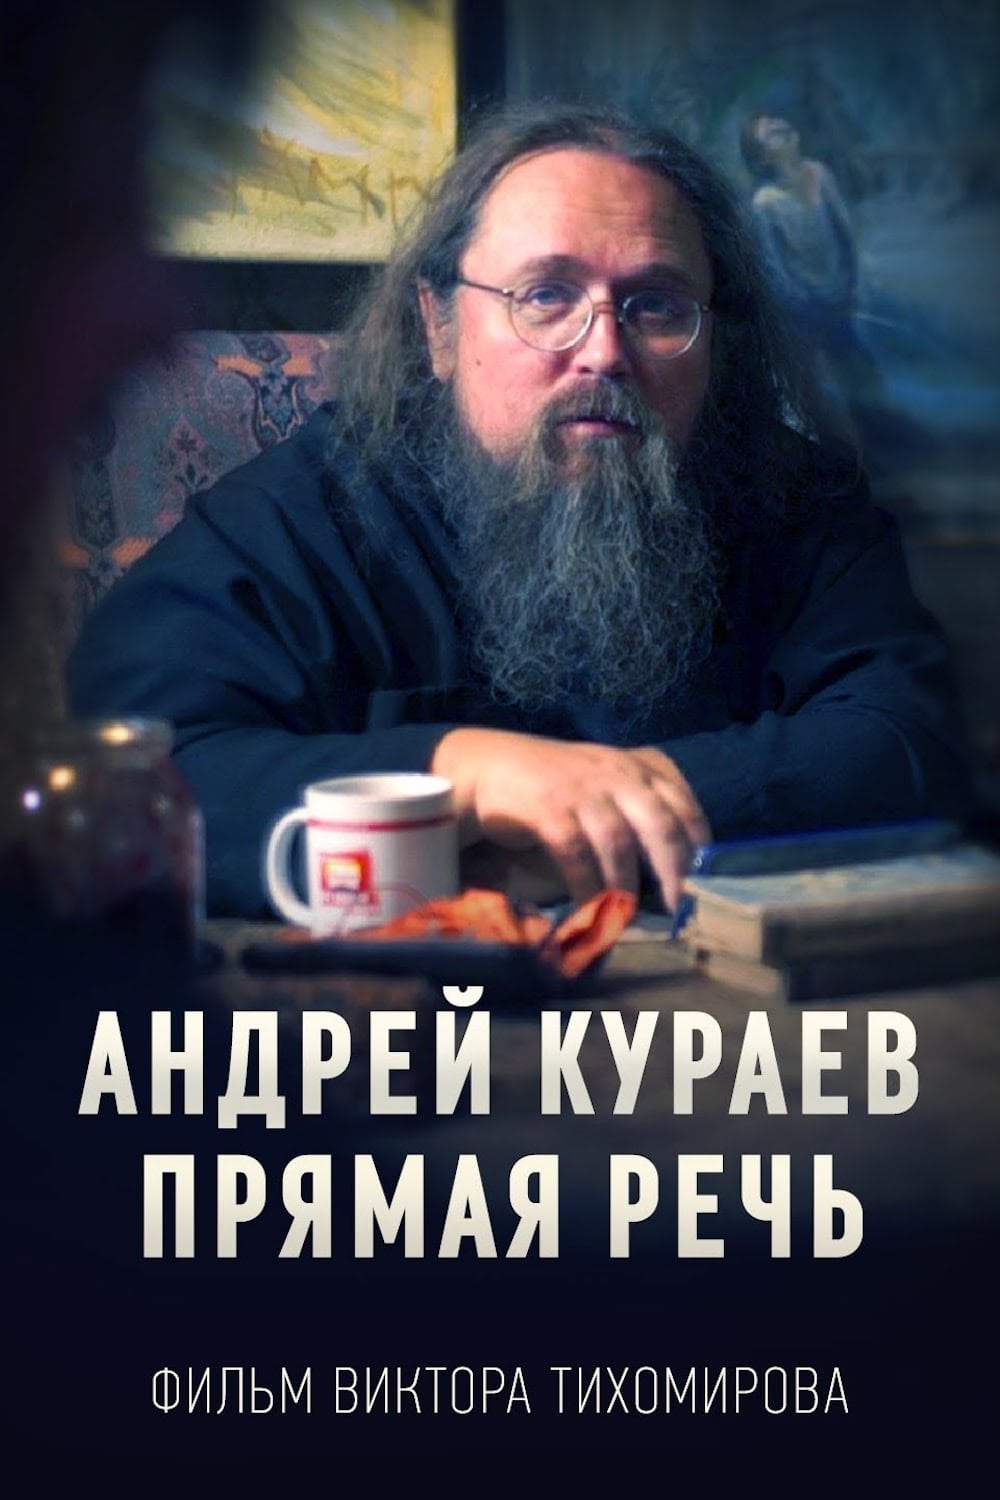 Andrey Kuraev. Direct Speech